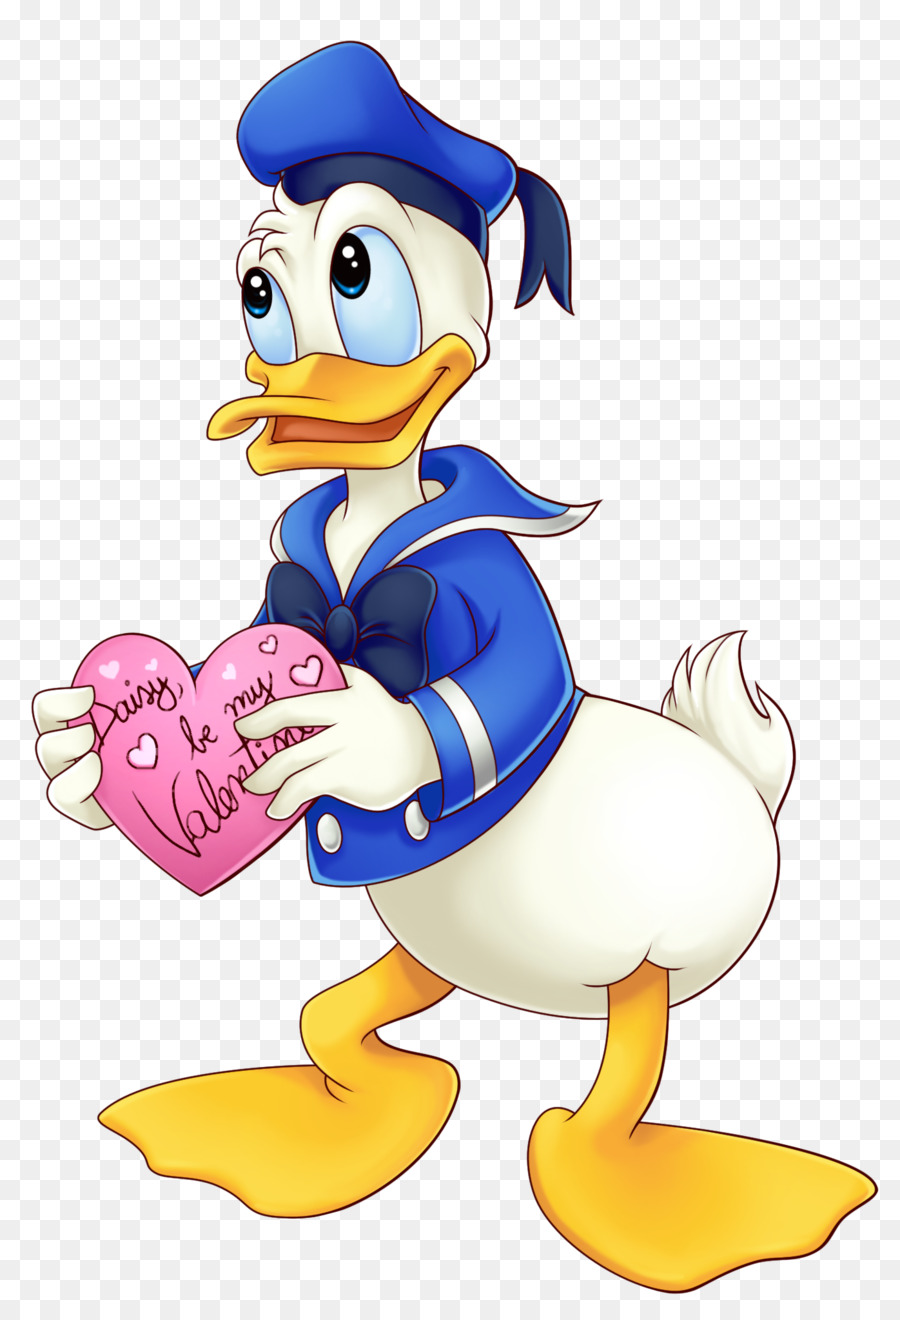 Donald Duck: Goin Quackers Daisy Duck Clip art - Donald Duck PNG Transparent Images png download - 1396*2032 - Free Transparent Donald Duck png Download.